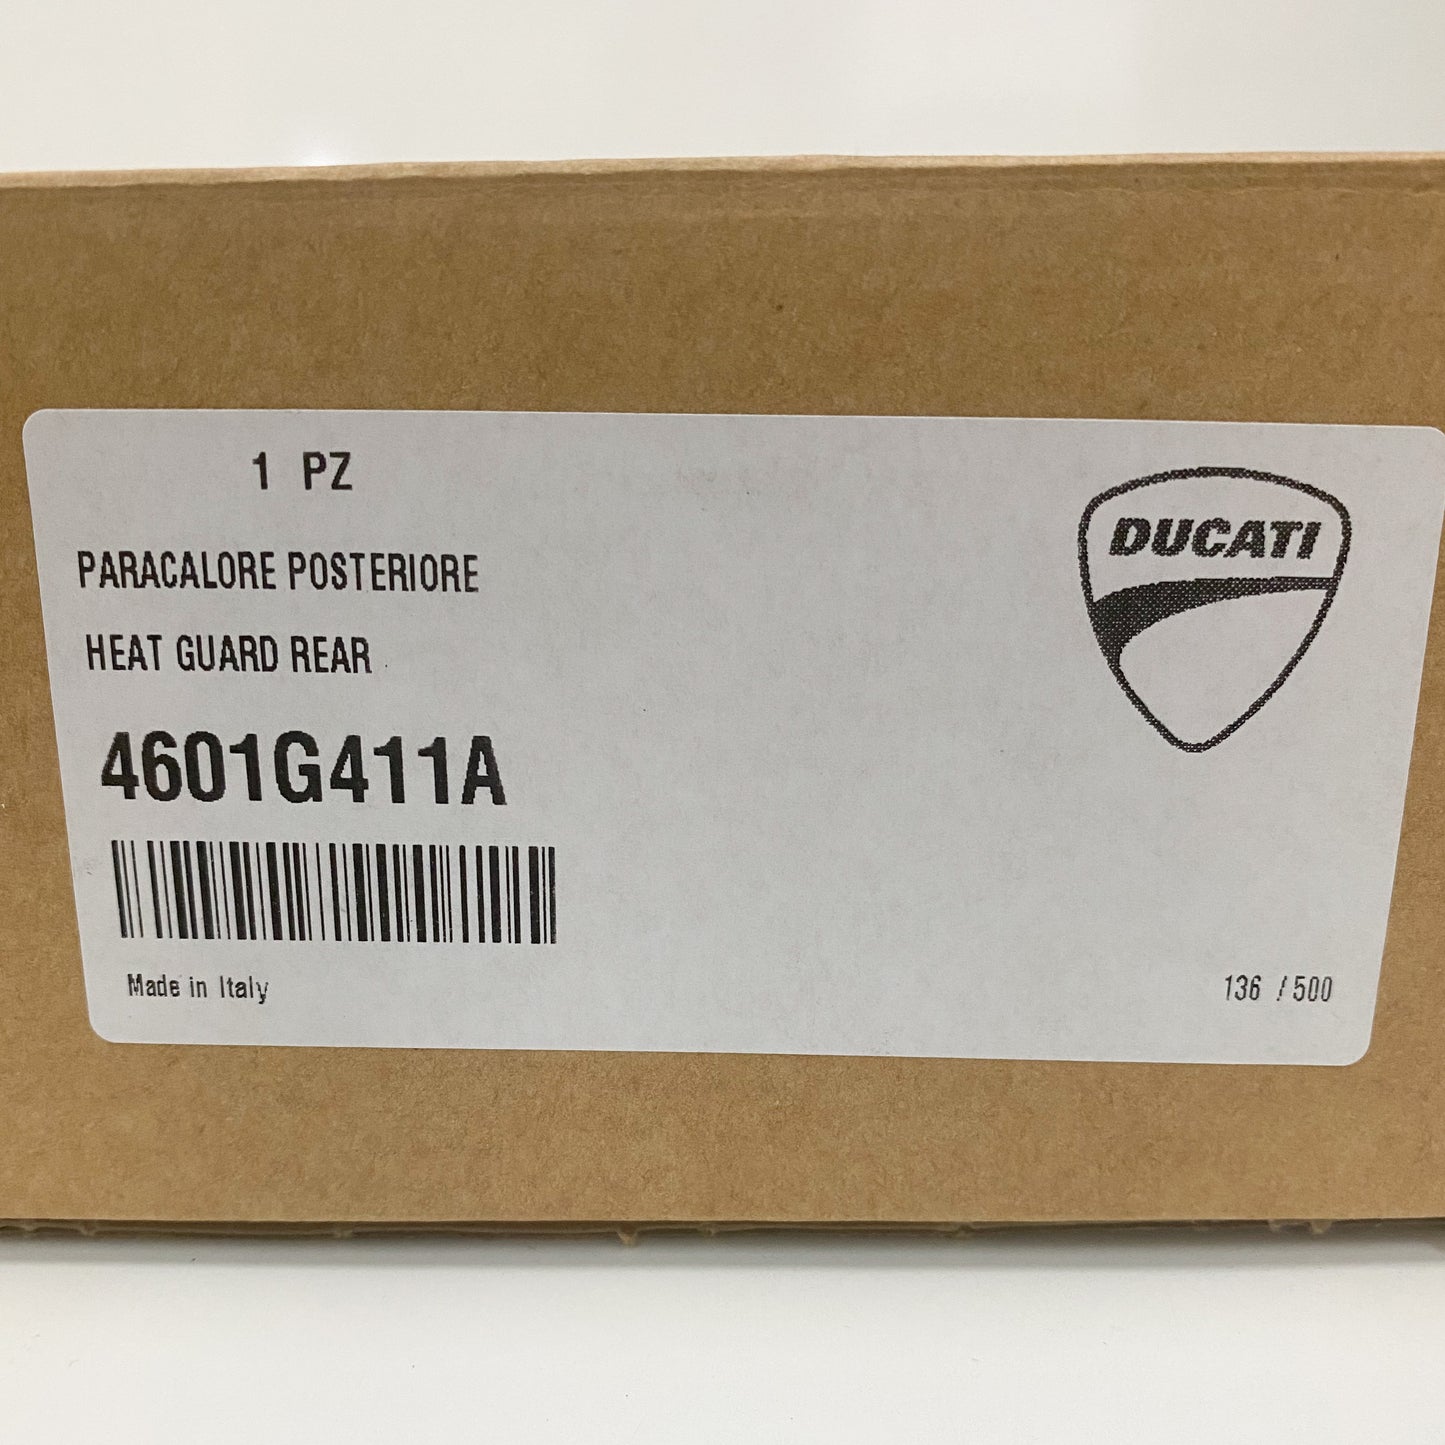 Ducati OEM Heat Guard Rear, SuperSport 4601G411A